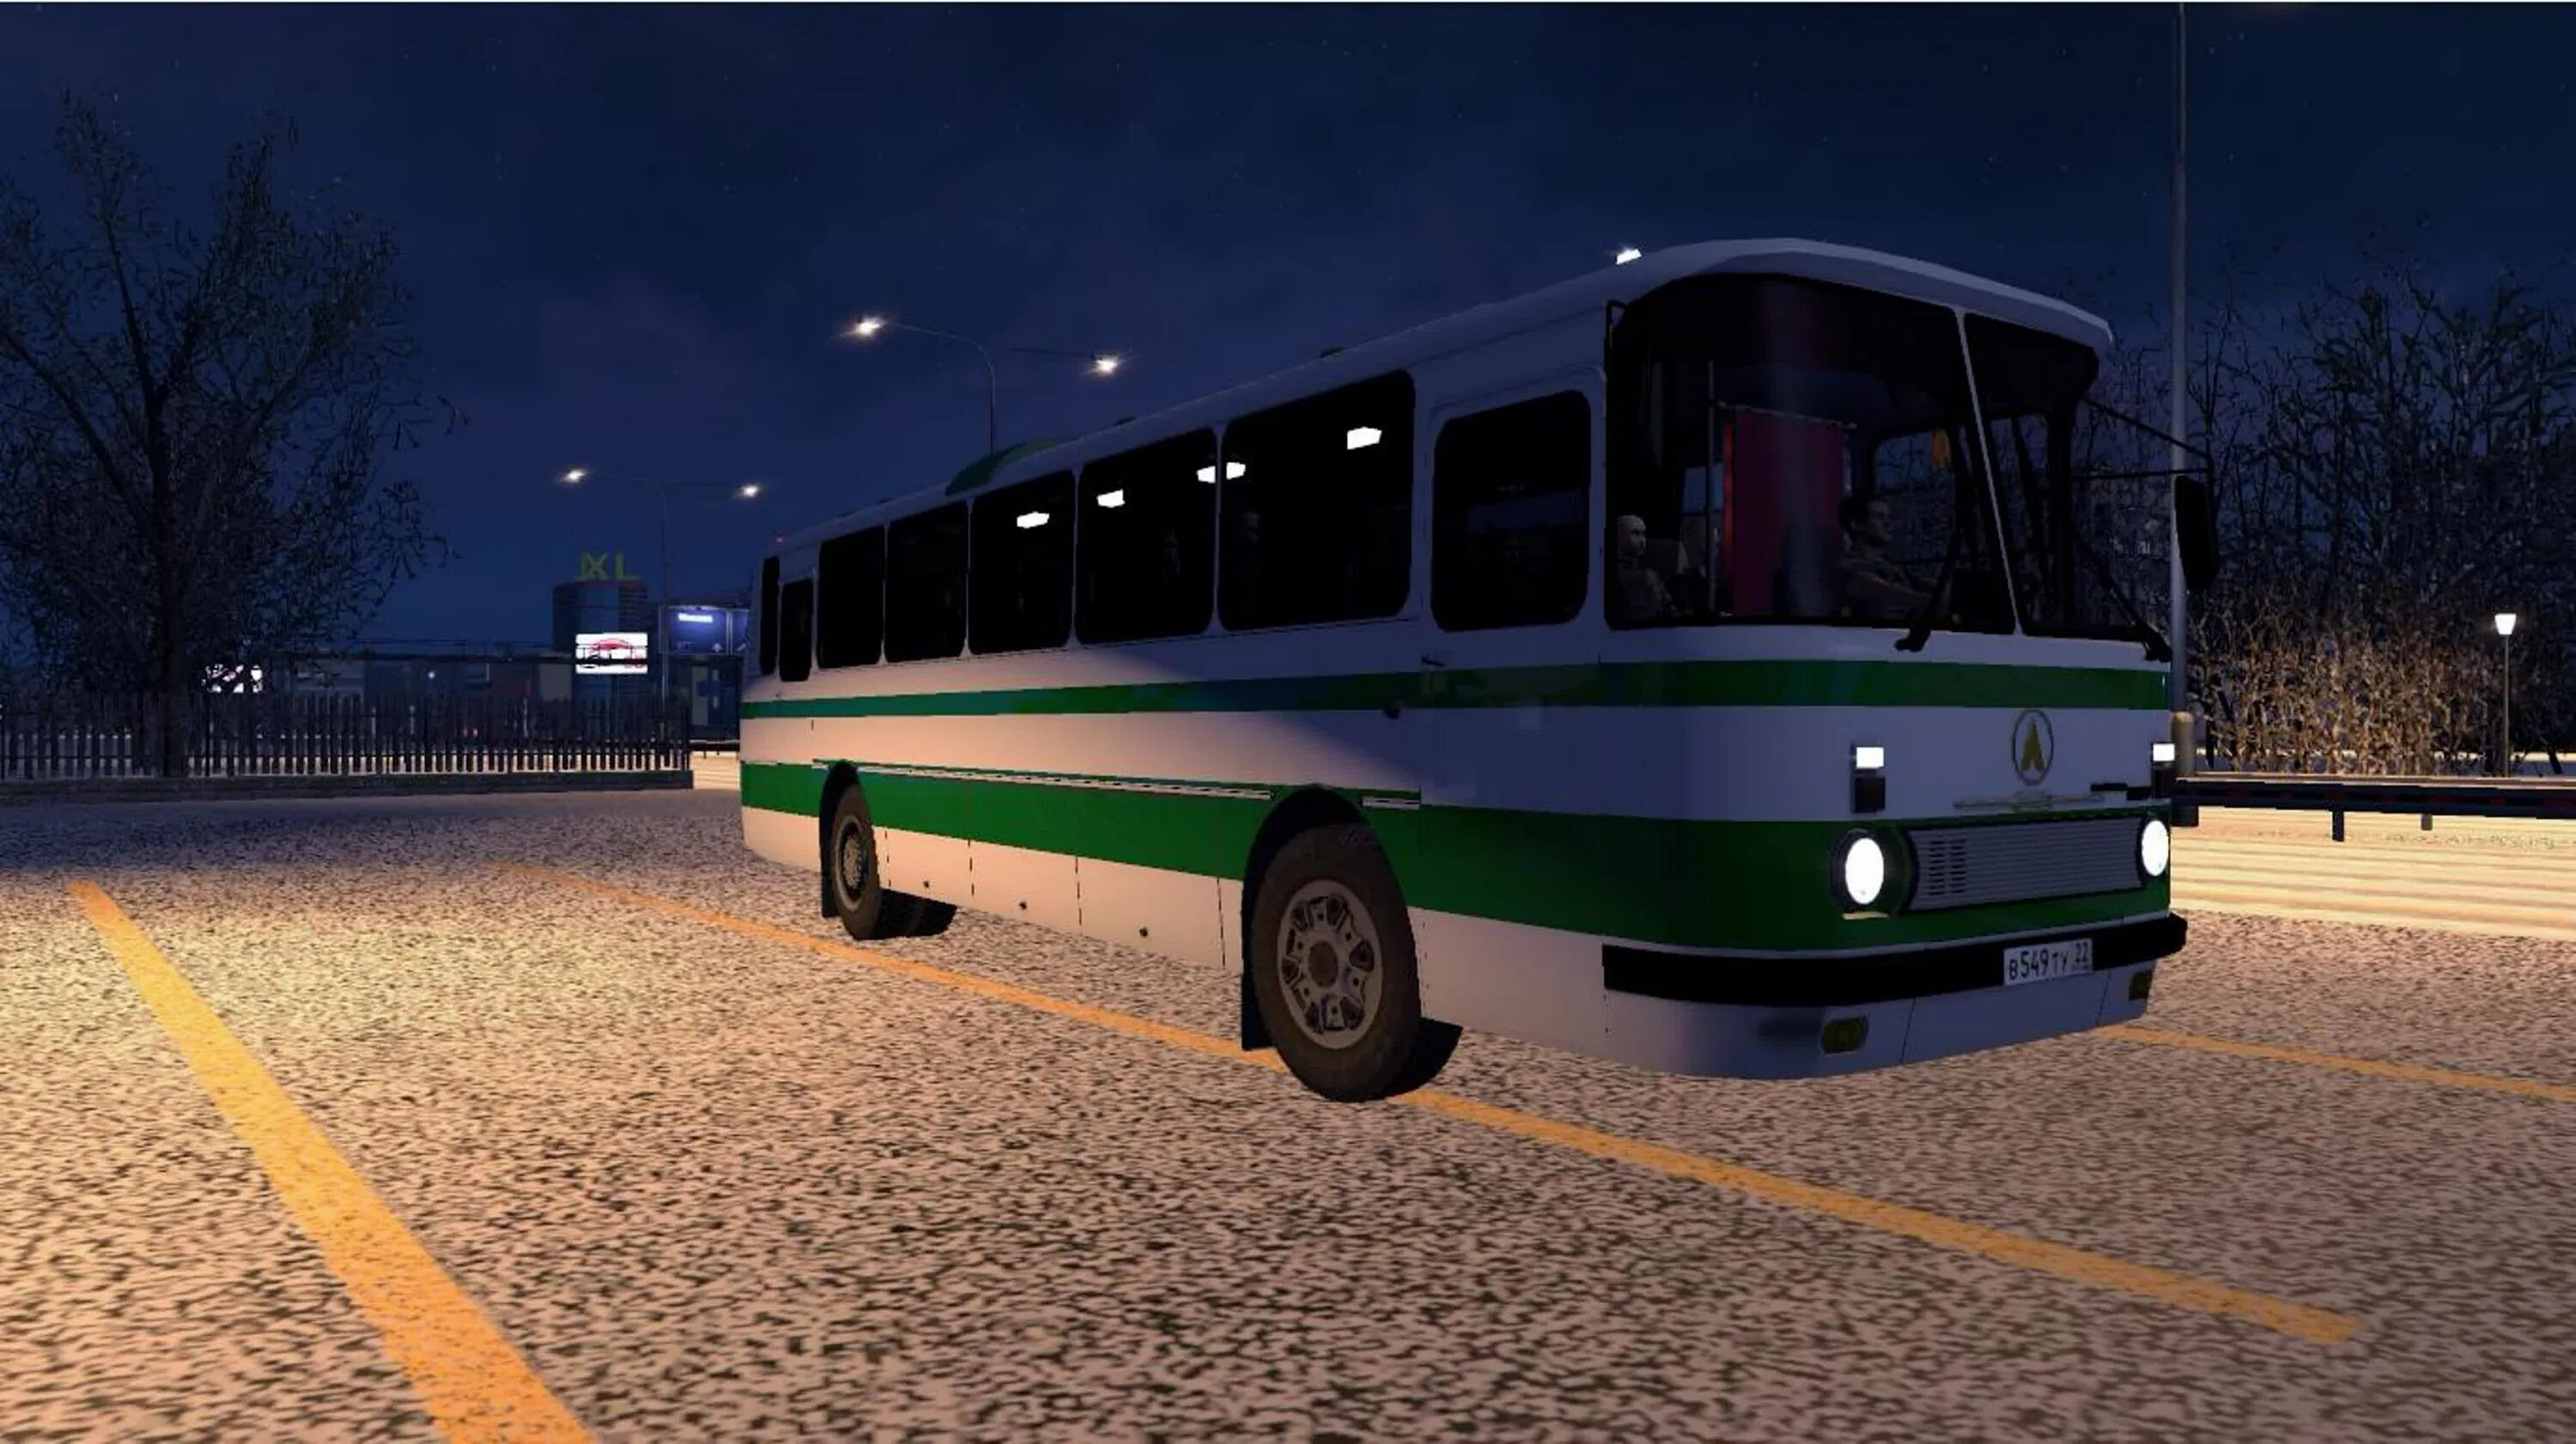 Евро трек симулятор автобусы. Автобусы для етс 2. Симулятор ЛАЗ 699. Euro Truck Simulator 2 автобус. ЛАЗ 699 для етс 2 1.39.